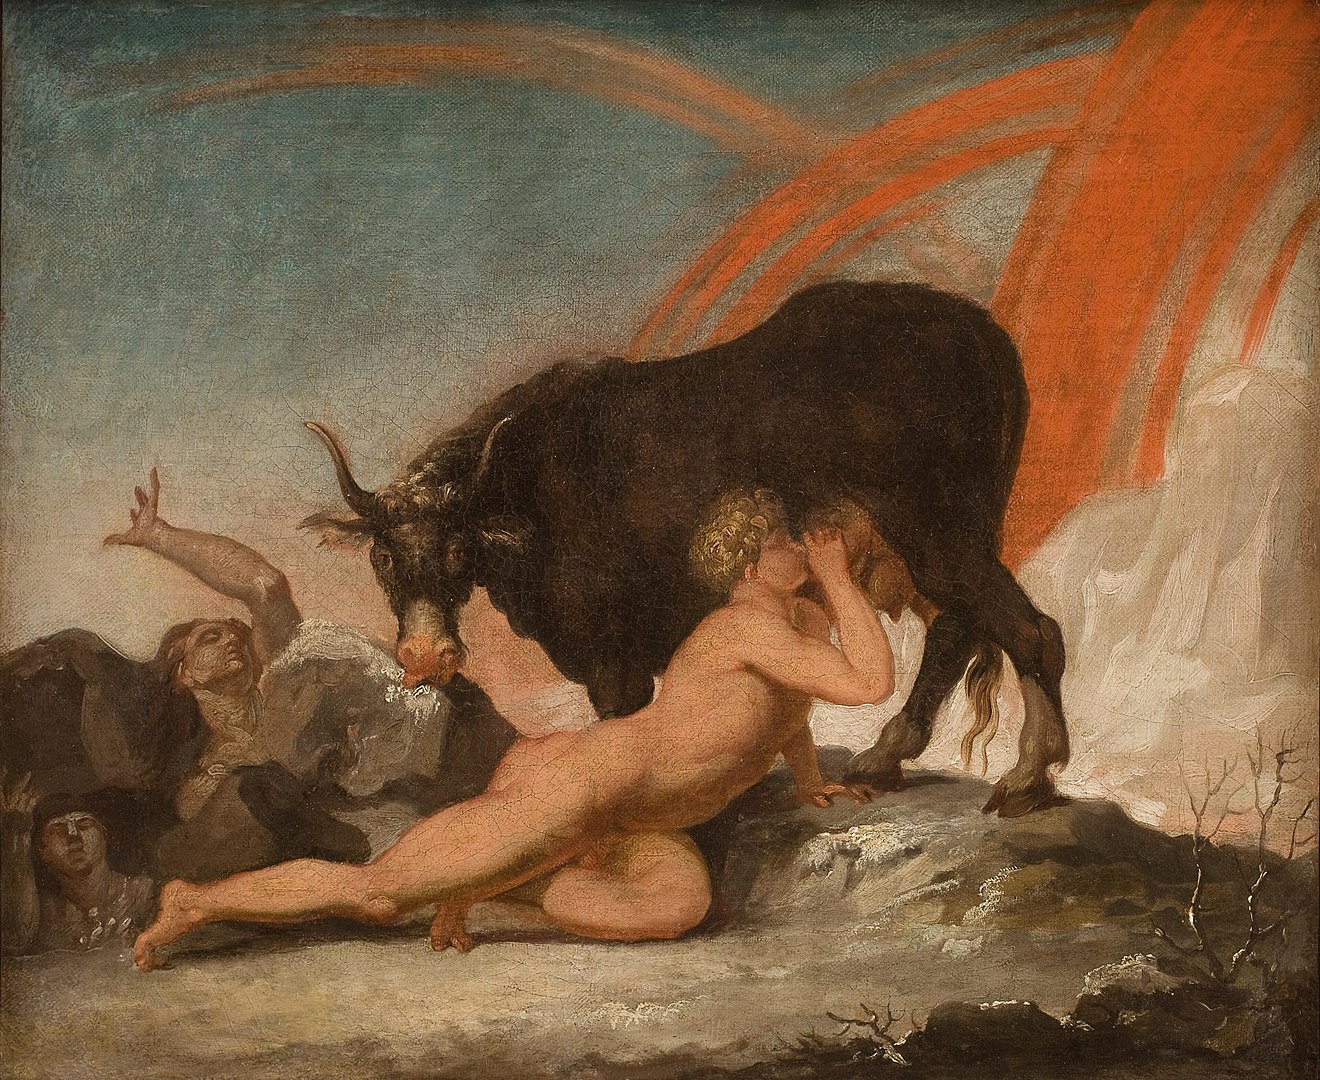 A nude man suckling a cow